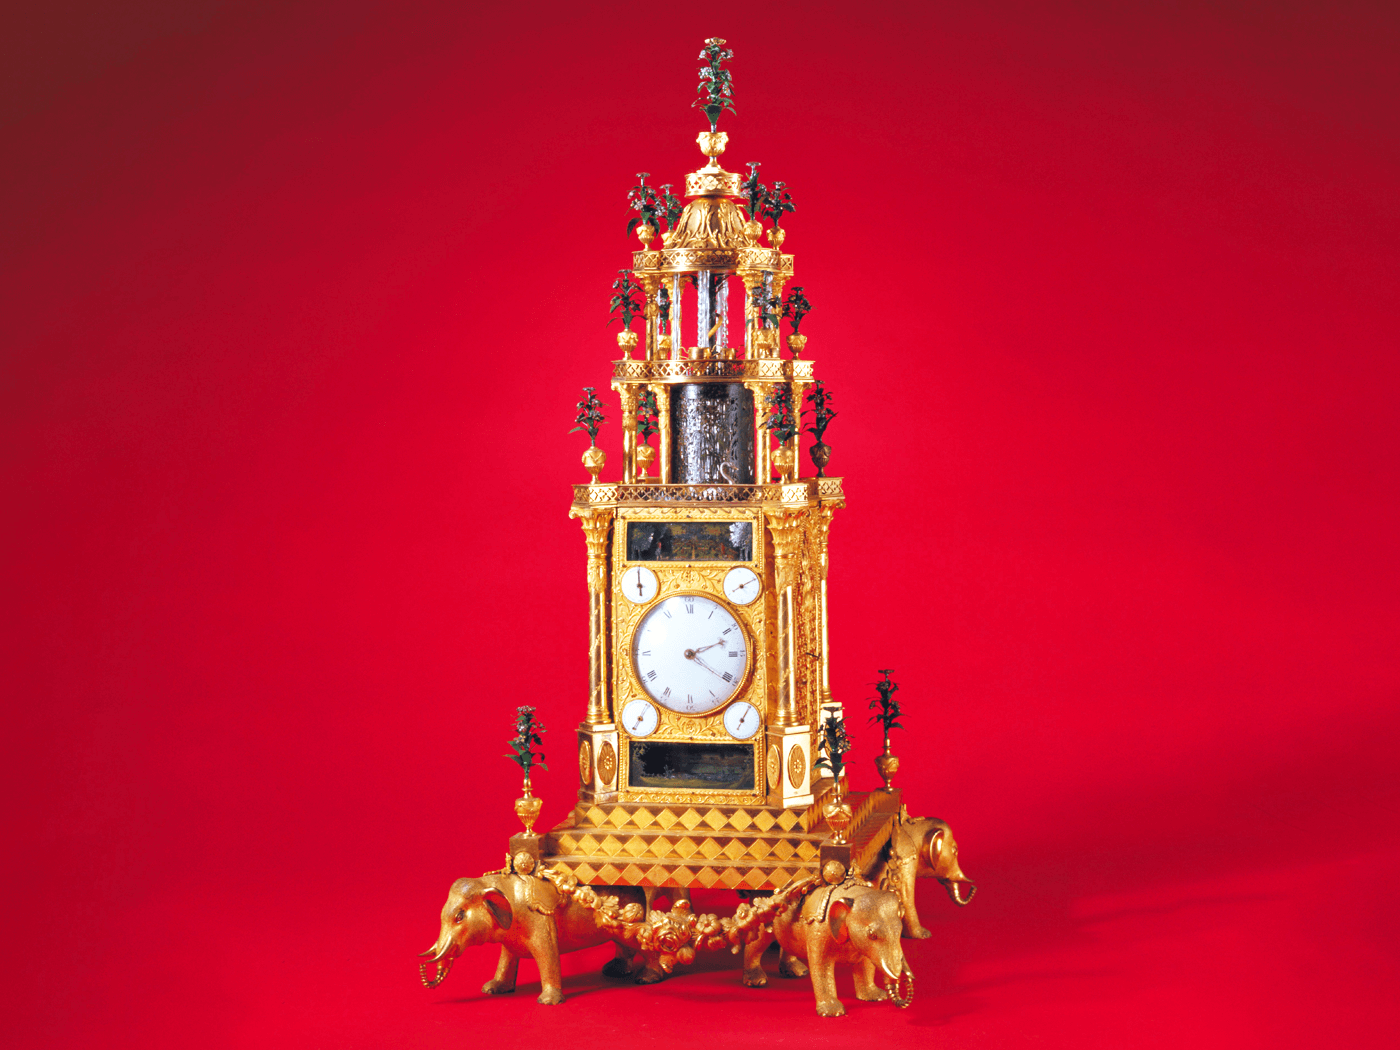 Clock with elephants, bird and automata